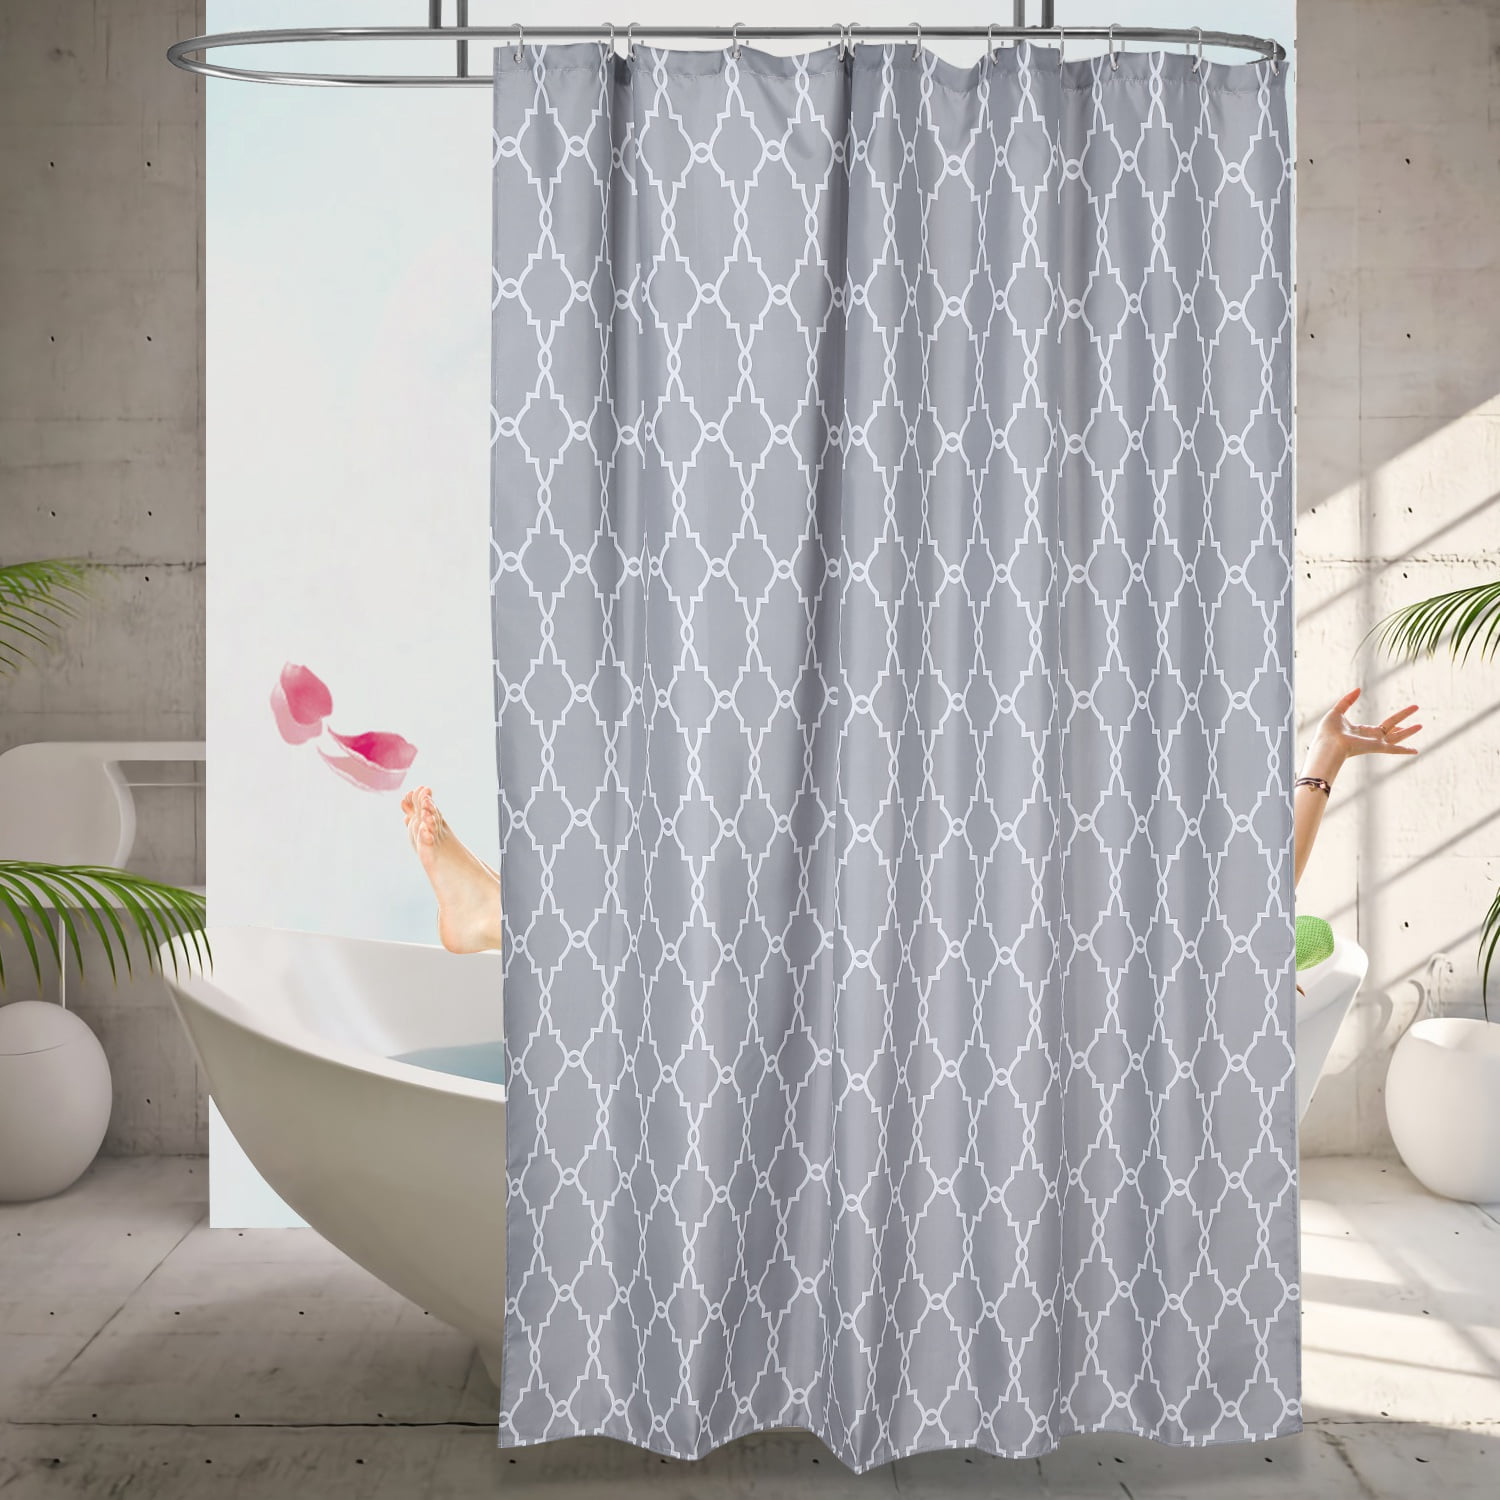 Theater Stage Fabric Shower Curtain Set Bathroom Waterproof Fabric & 12 Hooks 